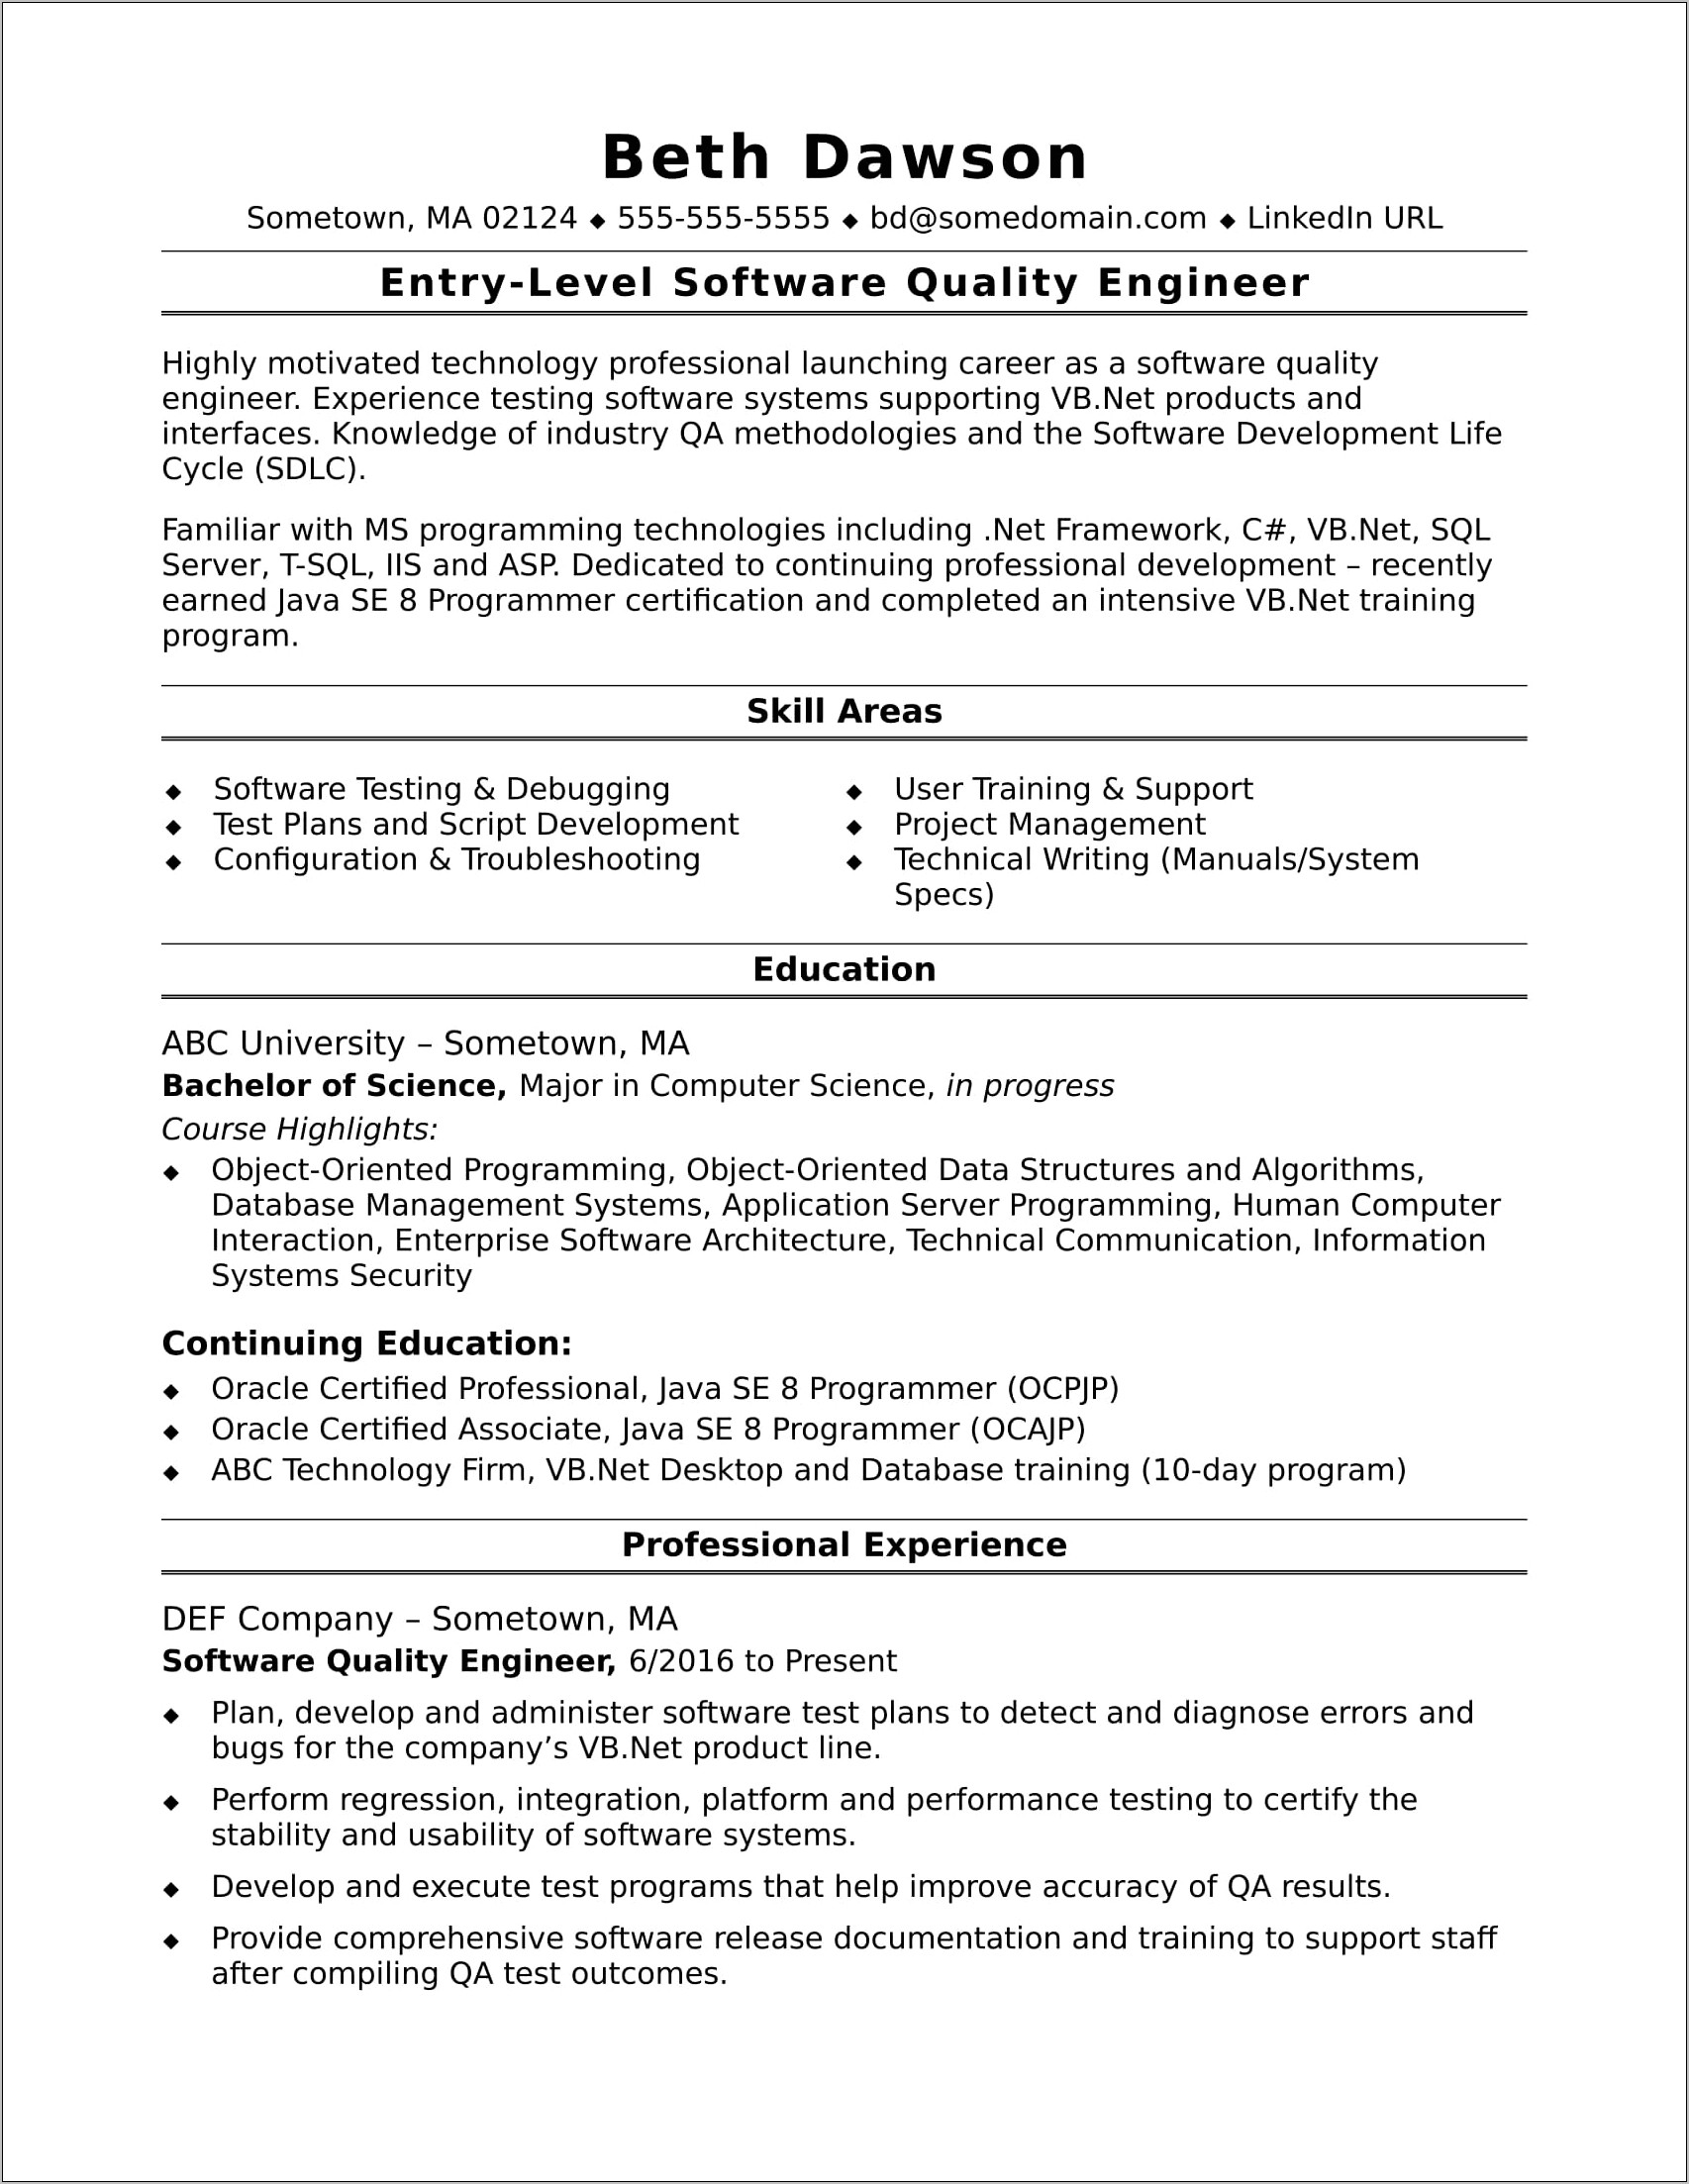 Associate Engineer Job Description For Resume